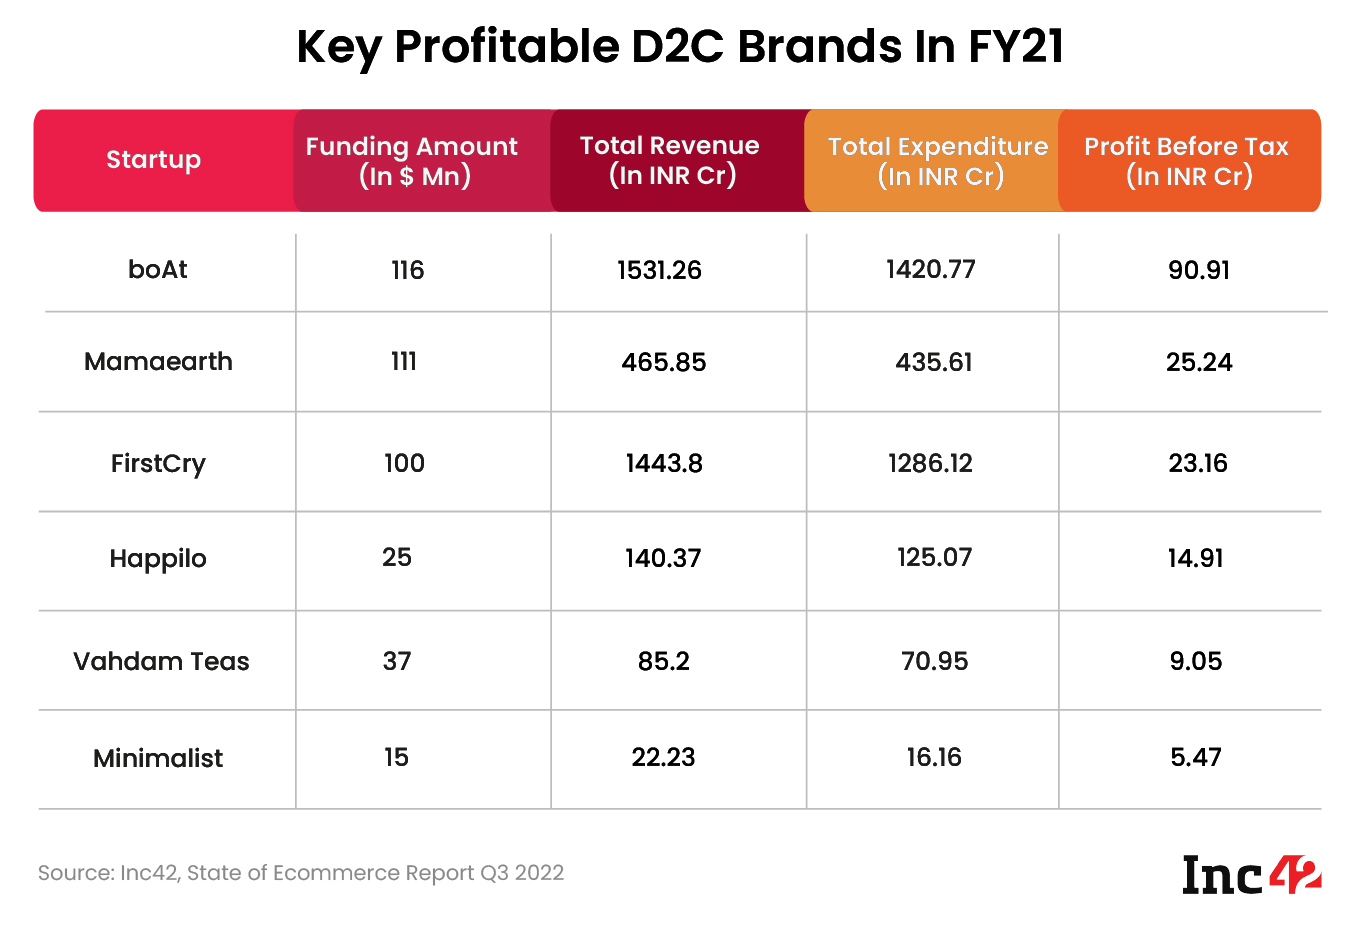 Key Profitable D2C Brands in FY21